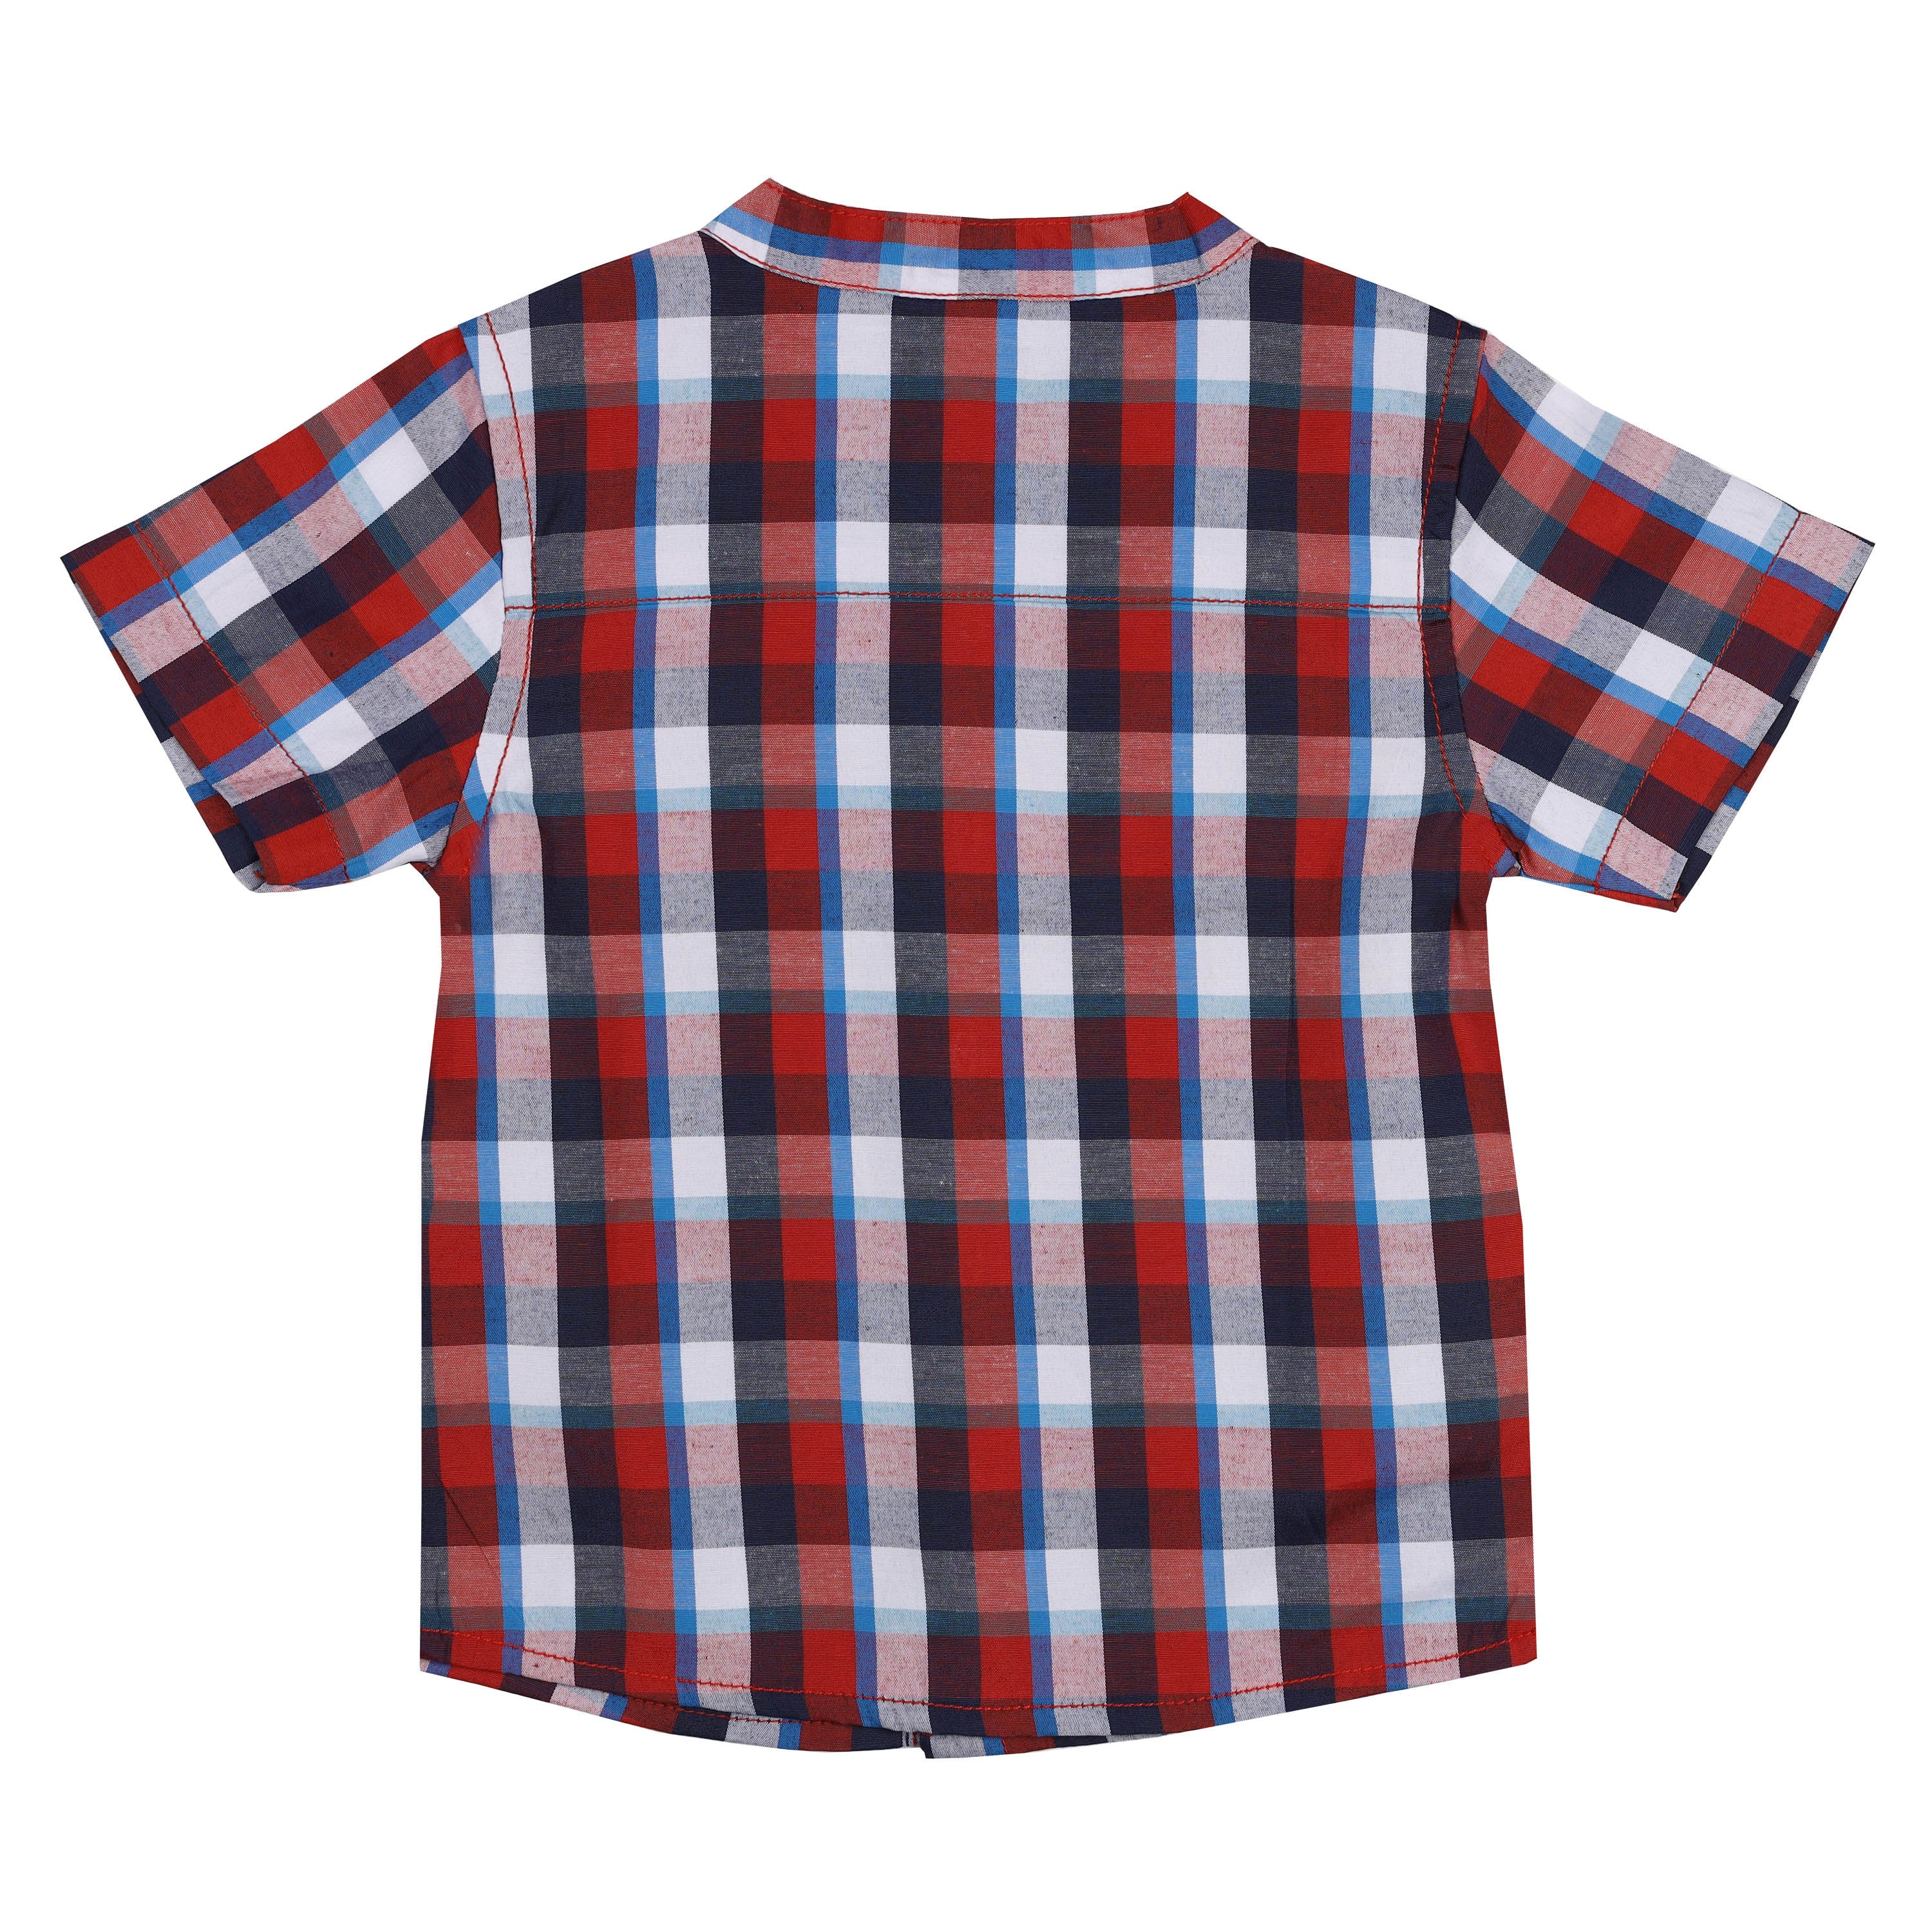 Kicks &Crawl - Check's & Rec's Baby Shirt (3-24 Months)